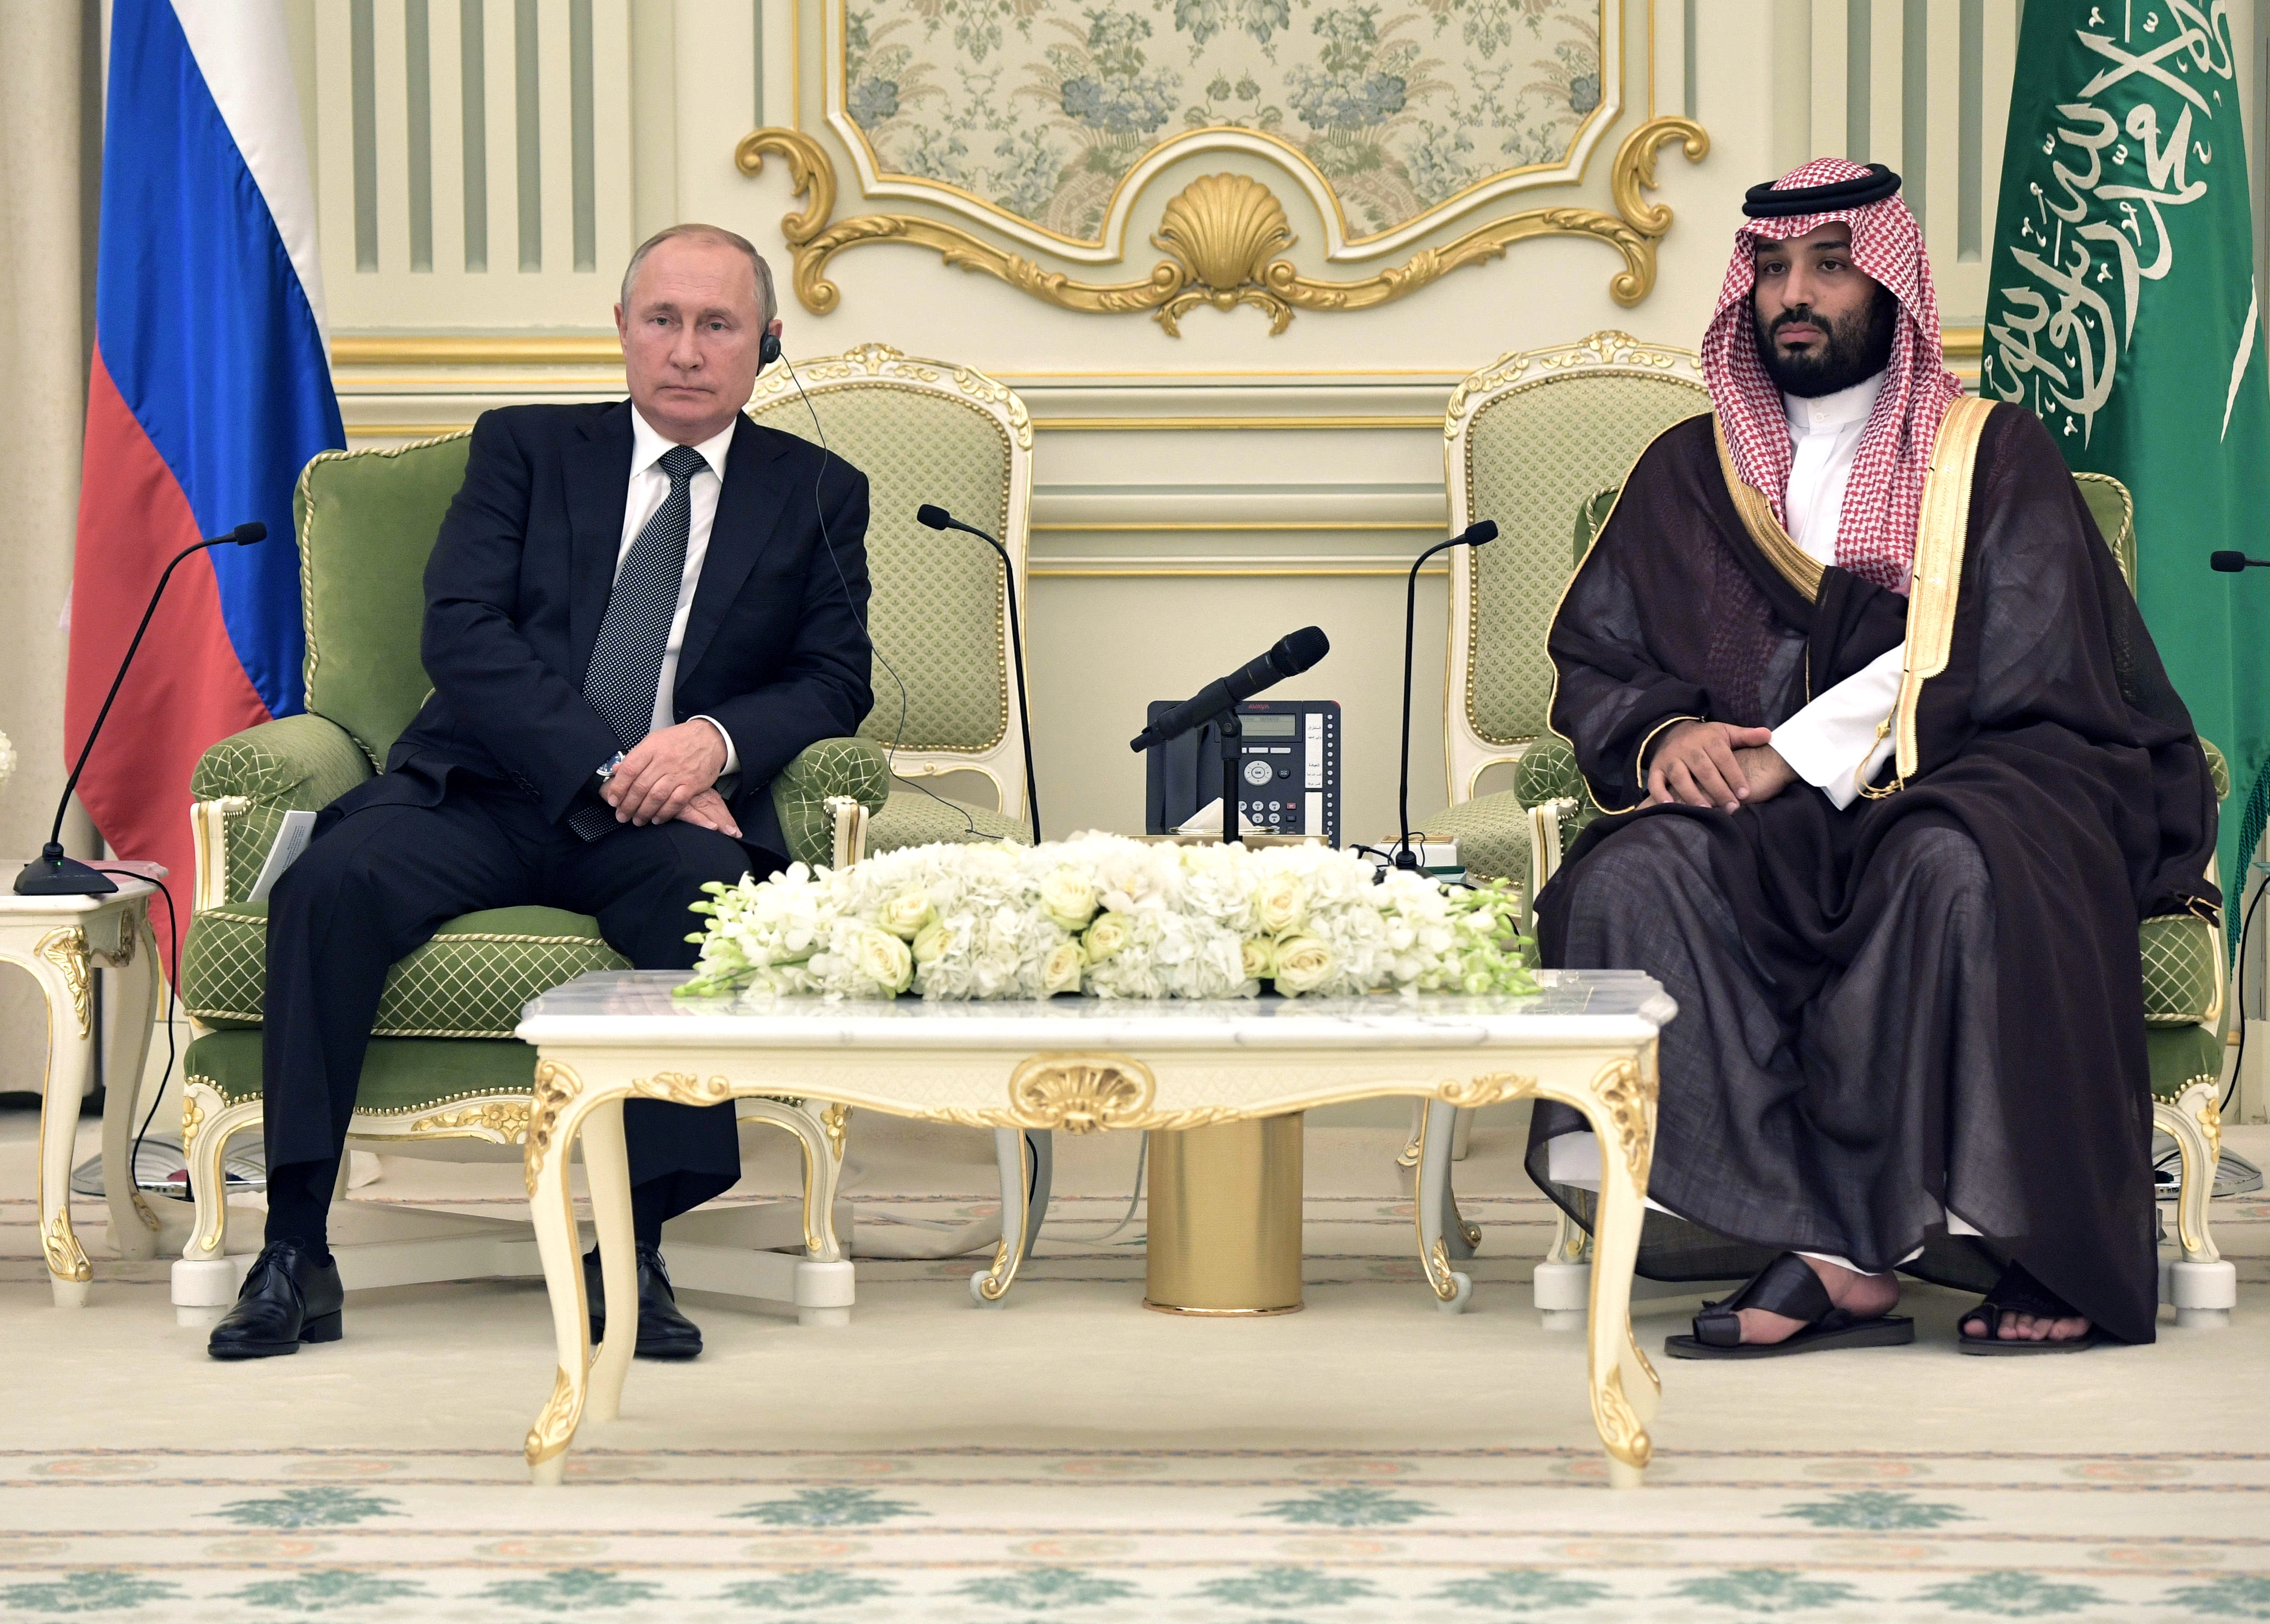 Russian President Vladimir Putin and Saudi Arabia's Crown Prince Mohammed bin Salman attend a meeting in Riyadh